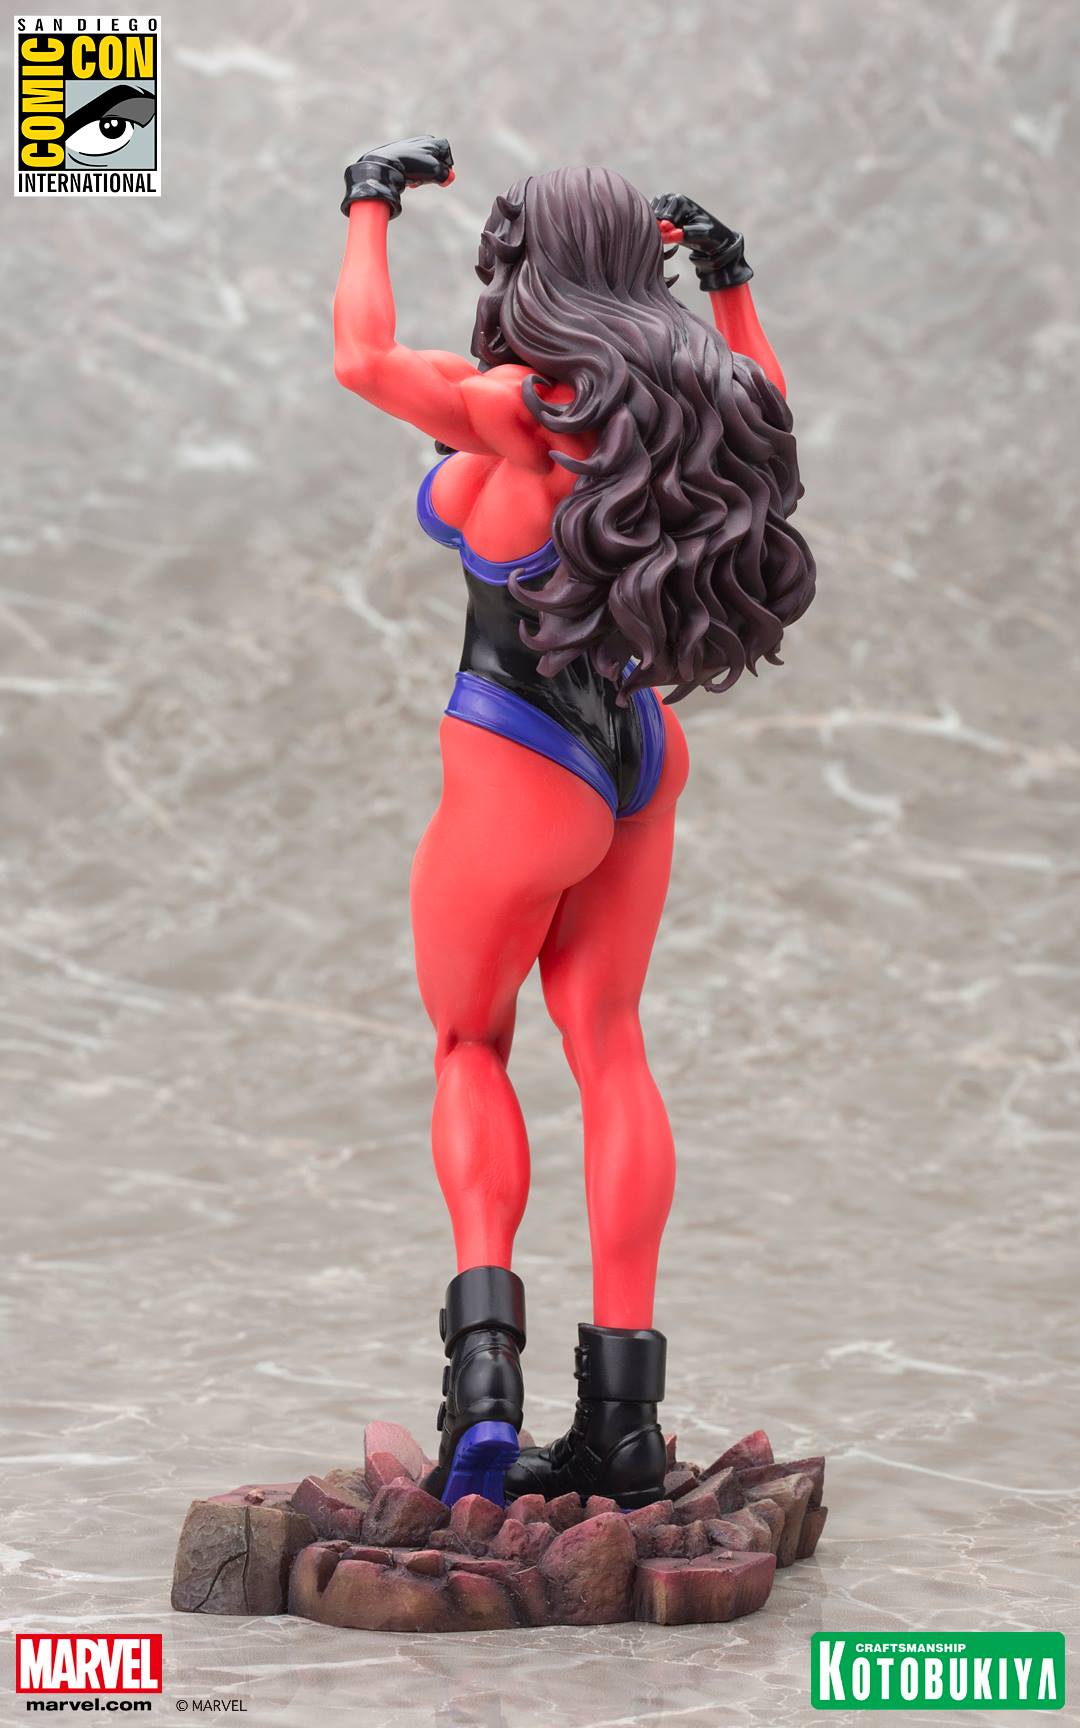 Action Figures: Marvel, DC, etc. - Página 4 Red-she-hulk-bishoujo-statue-2015-sdcc-exclusive-marvel-kotobukiya-4